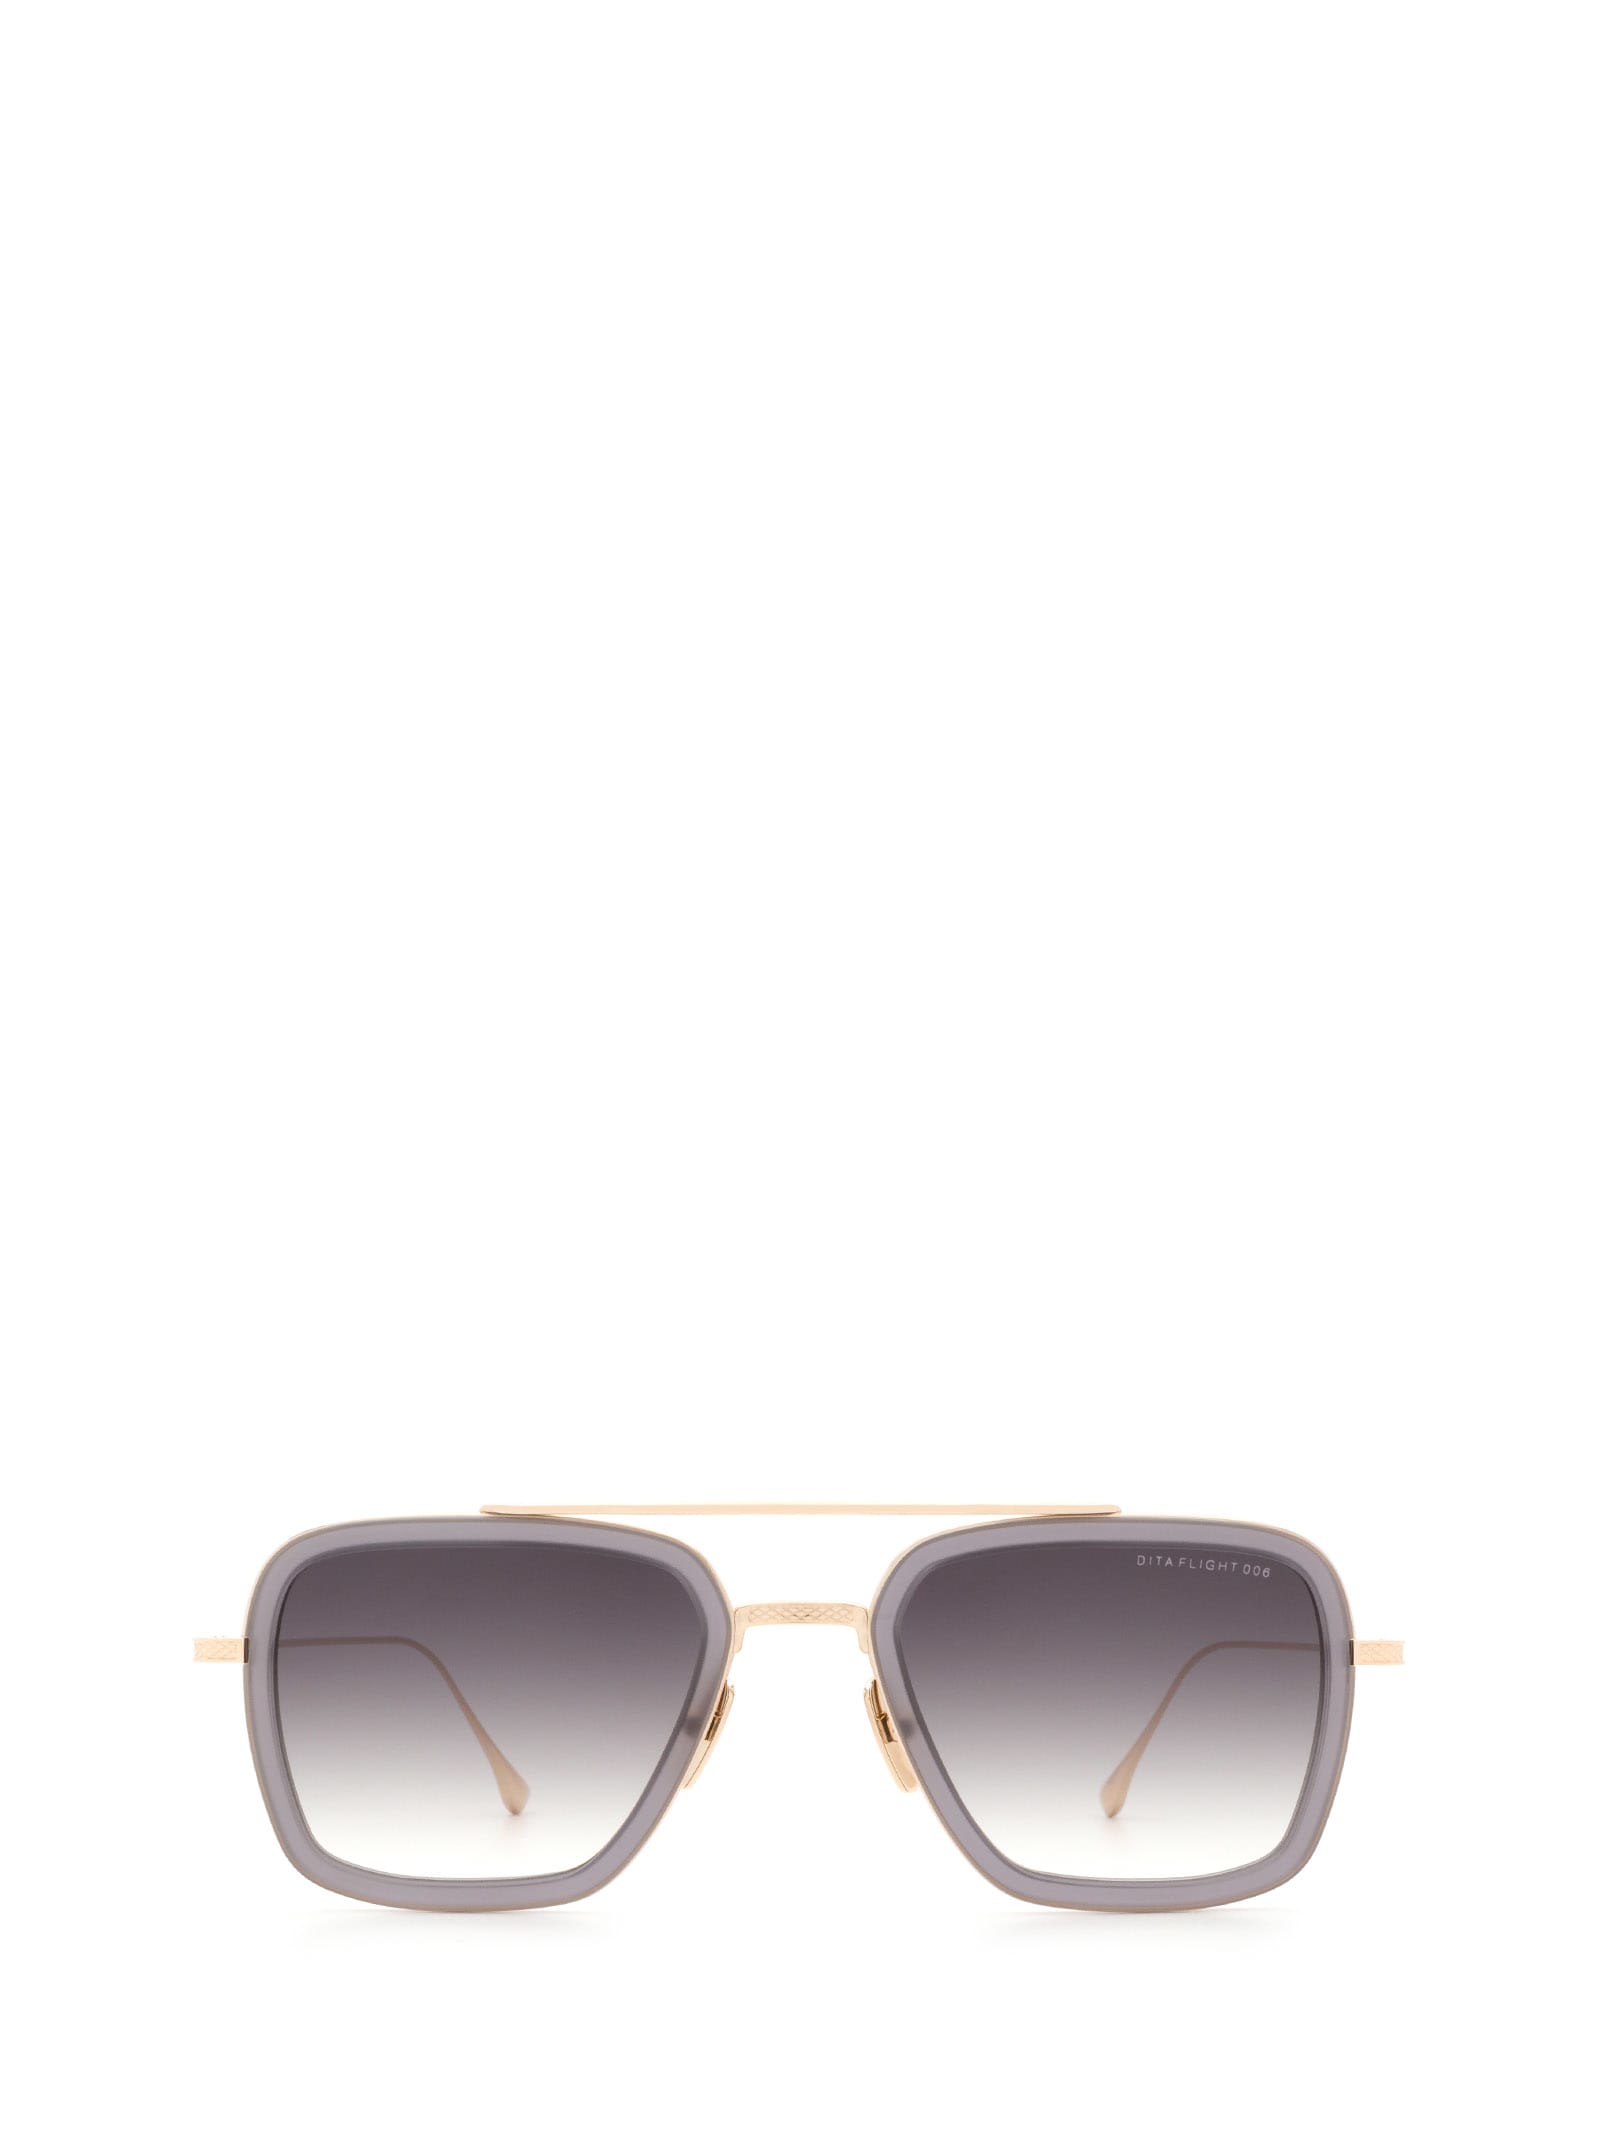 Dita Dita 7806-h Grey Gold Sunglasses